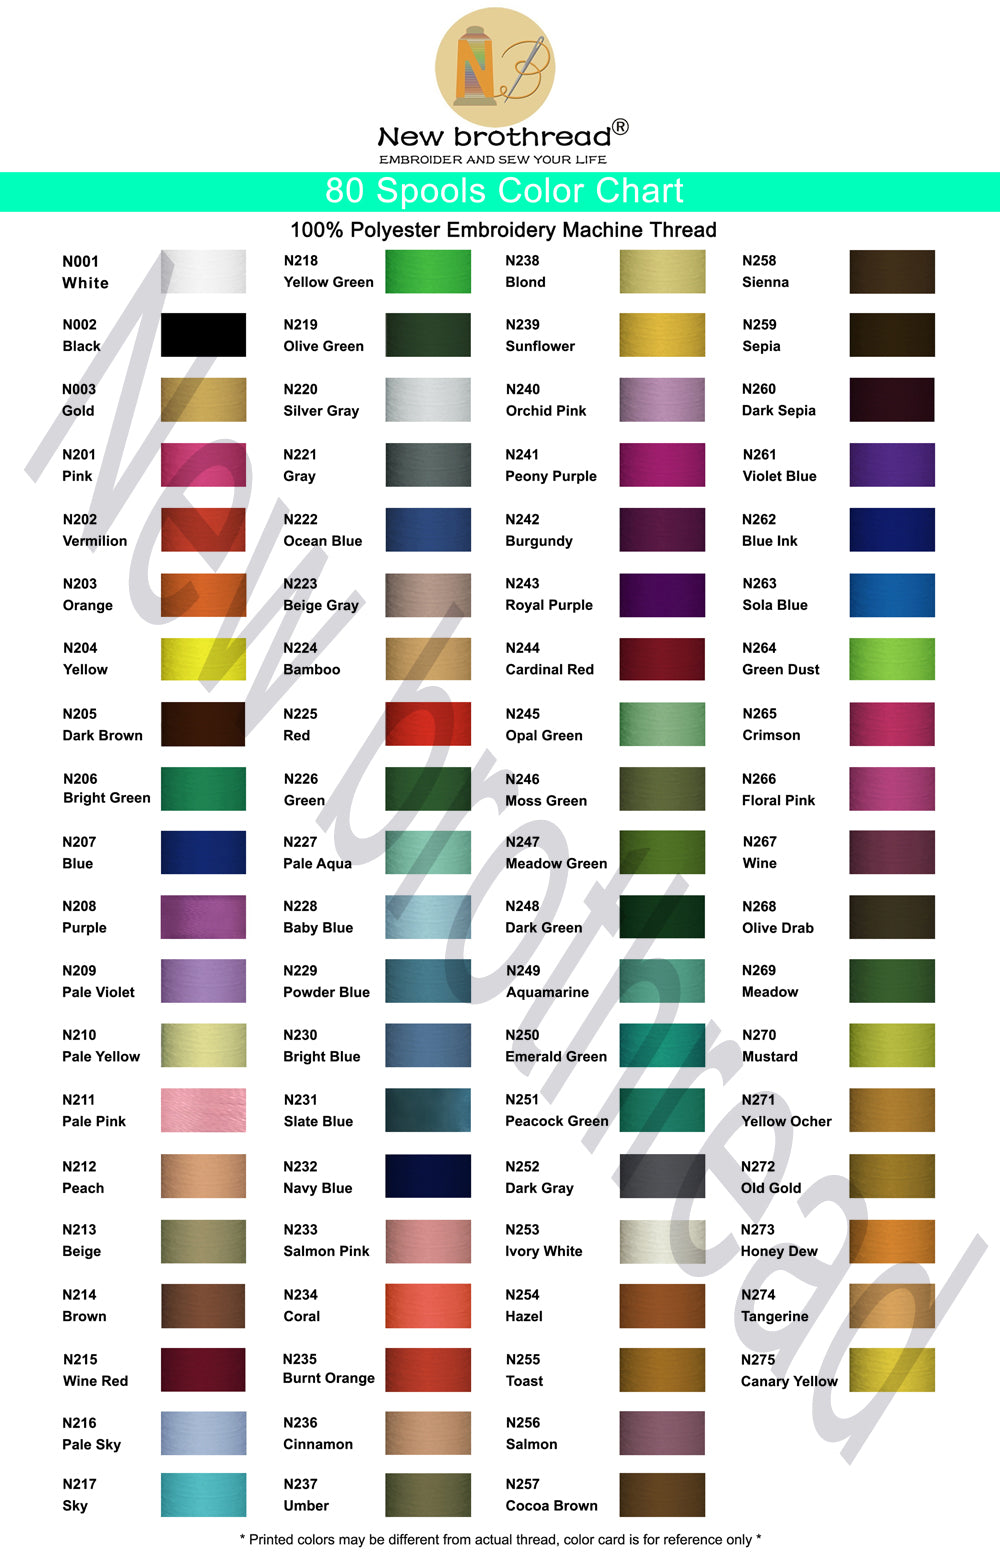 New brothread 16 Pastel Colors Multi-Purpose 100% Mercerized Cotton Th